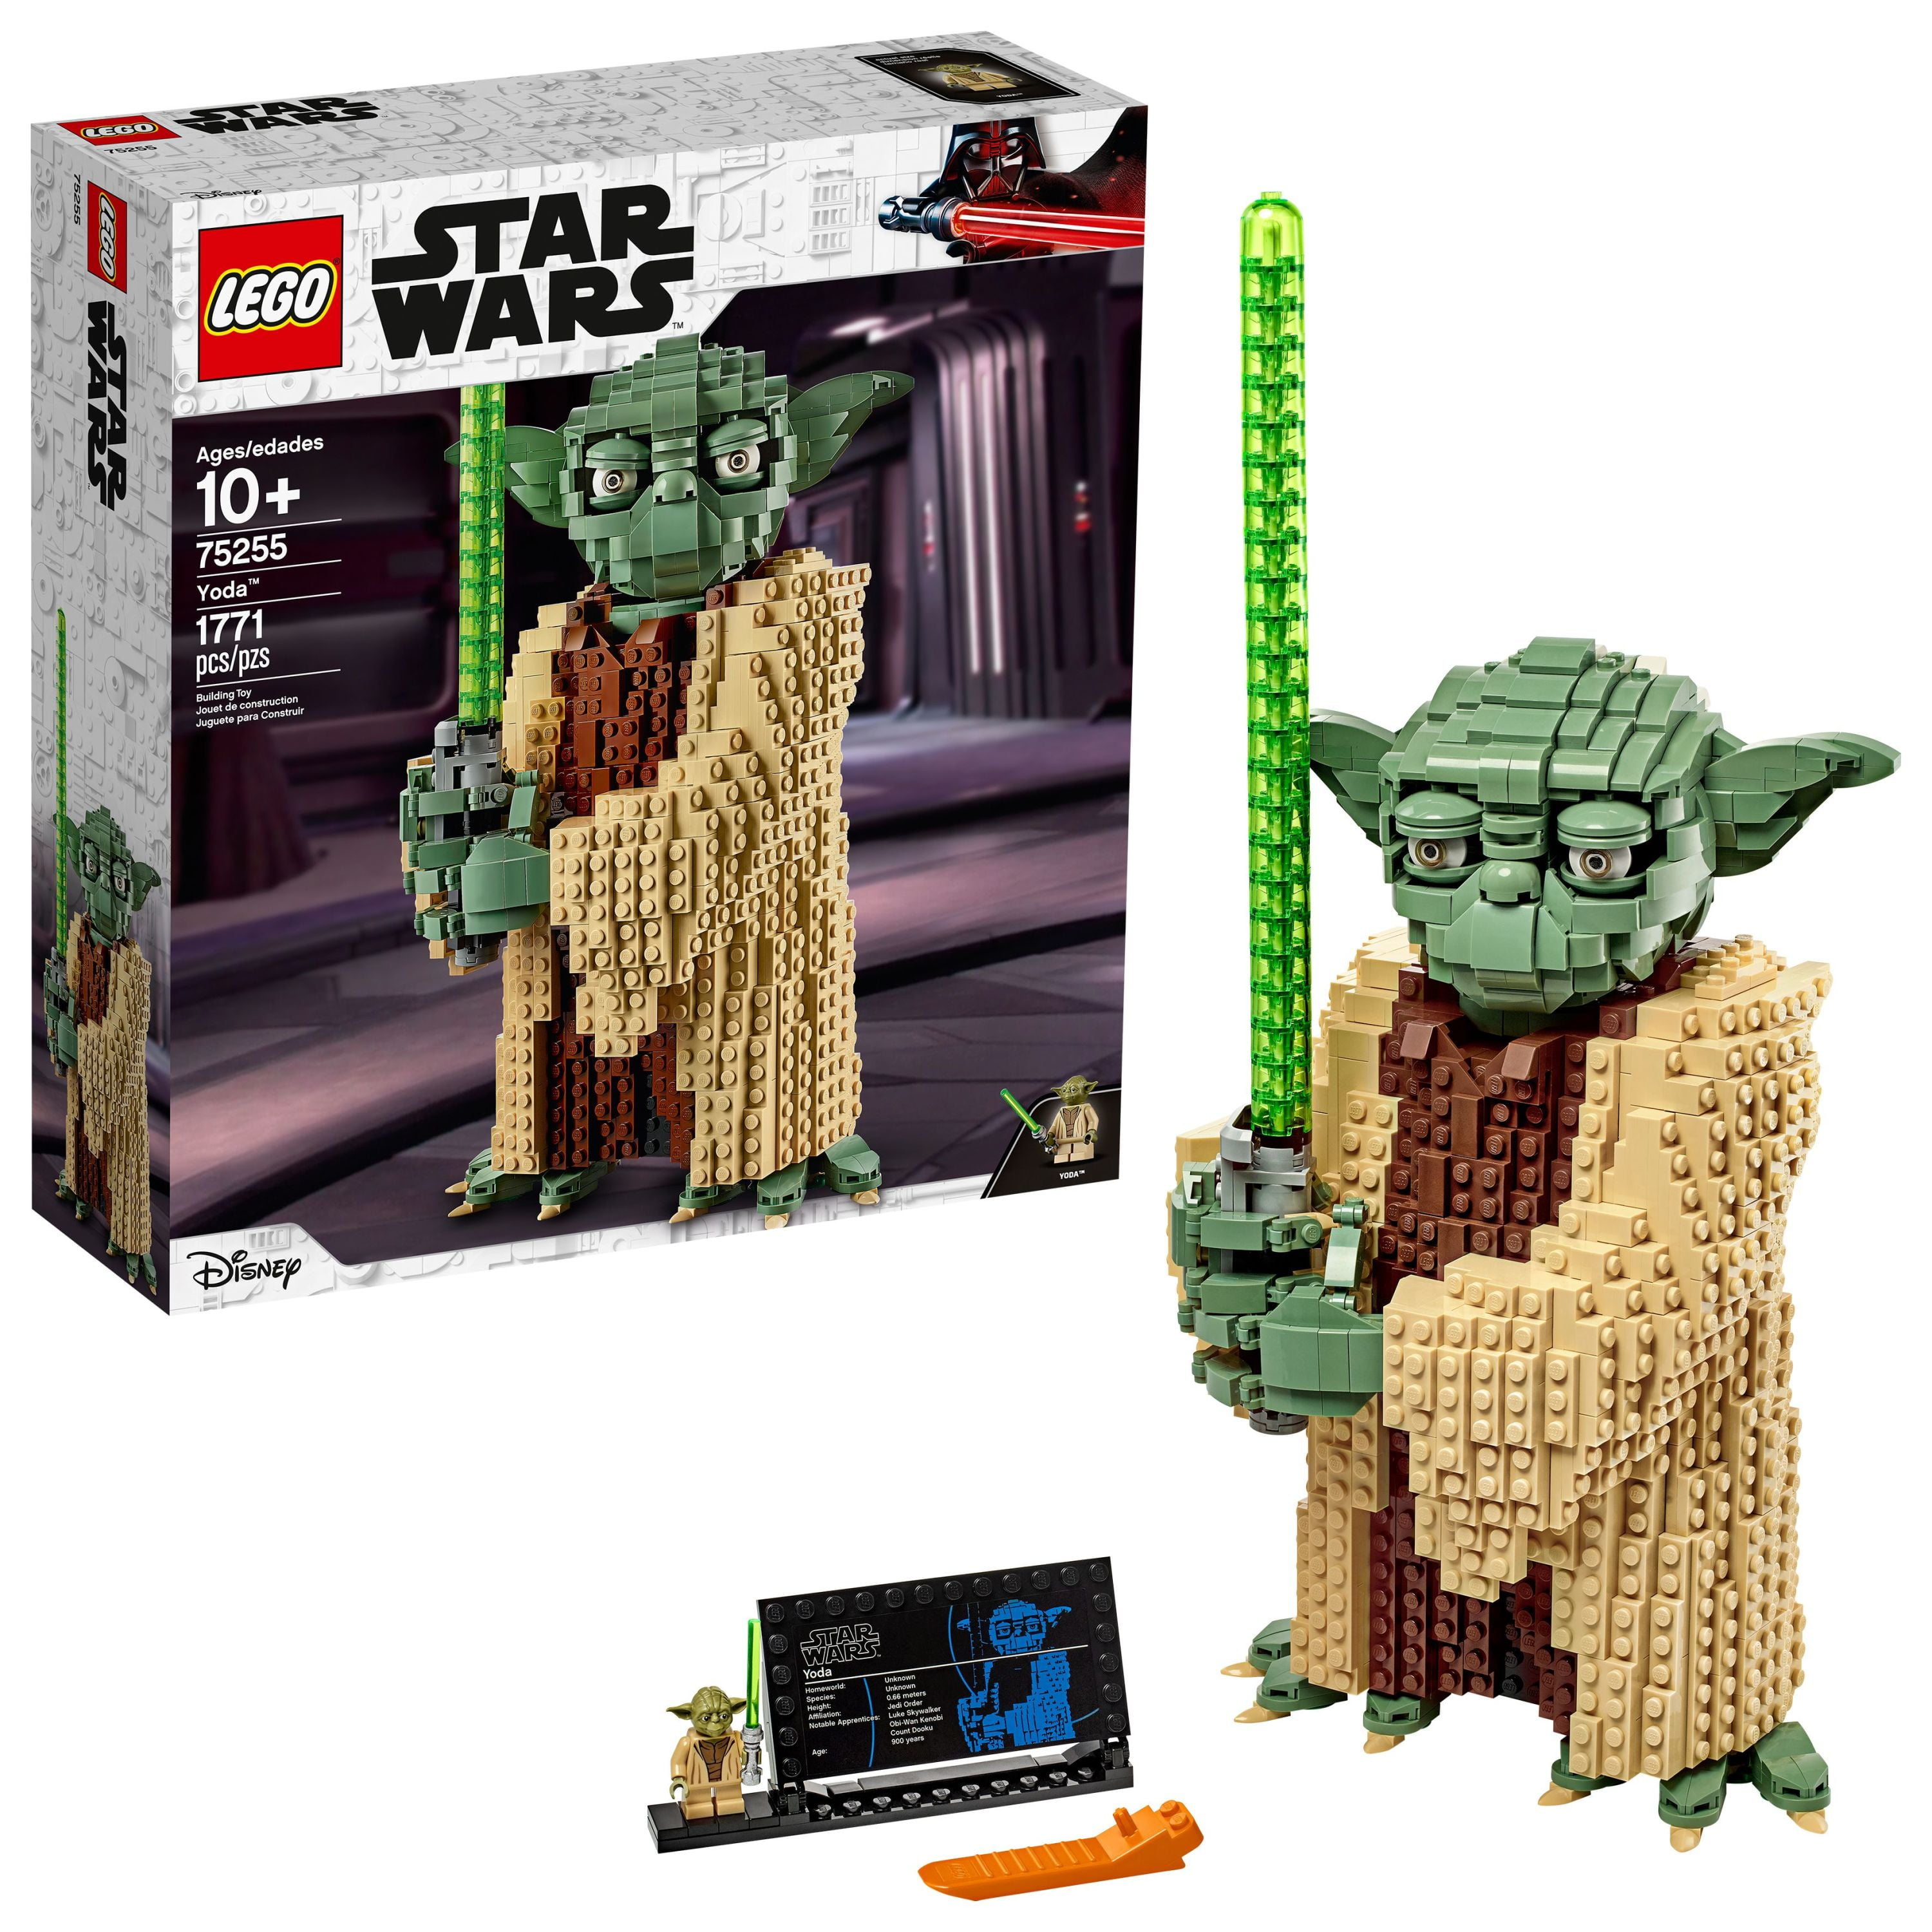 Isolere Efterforskning Til ære for LEGO Star Wars: Attack of the Clones Yoda 75255 Building Toy Set (1,771  Pieces) - Walmart.com